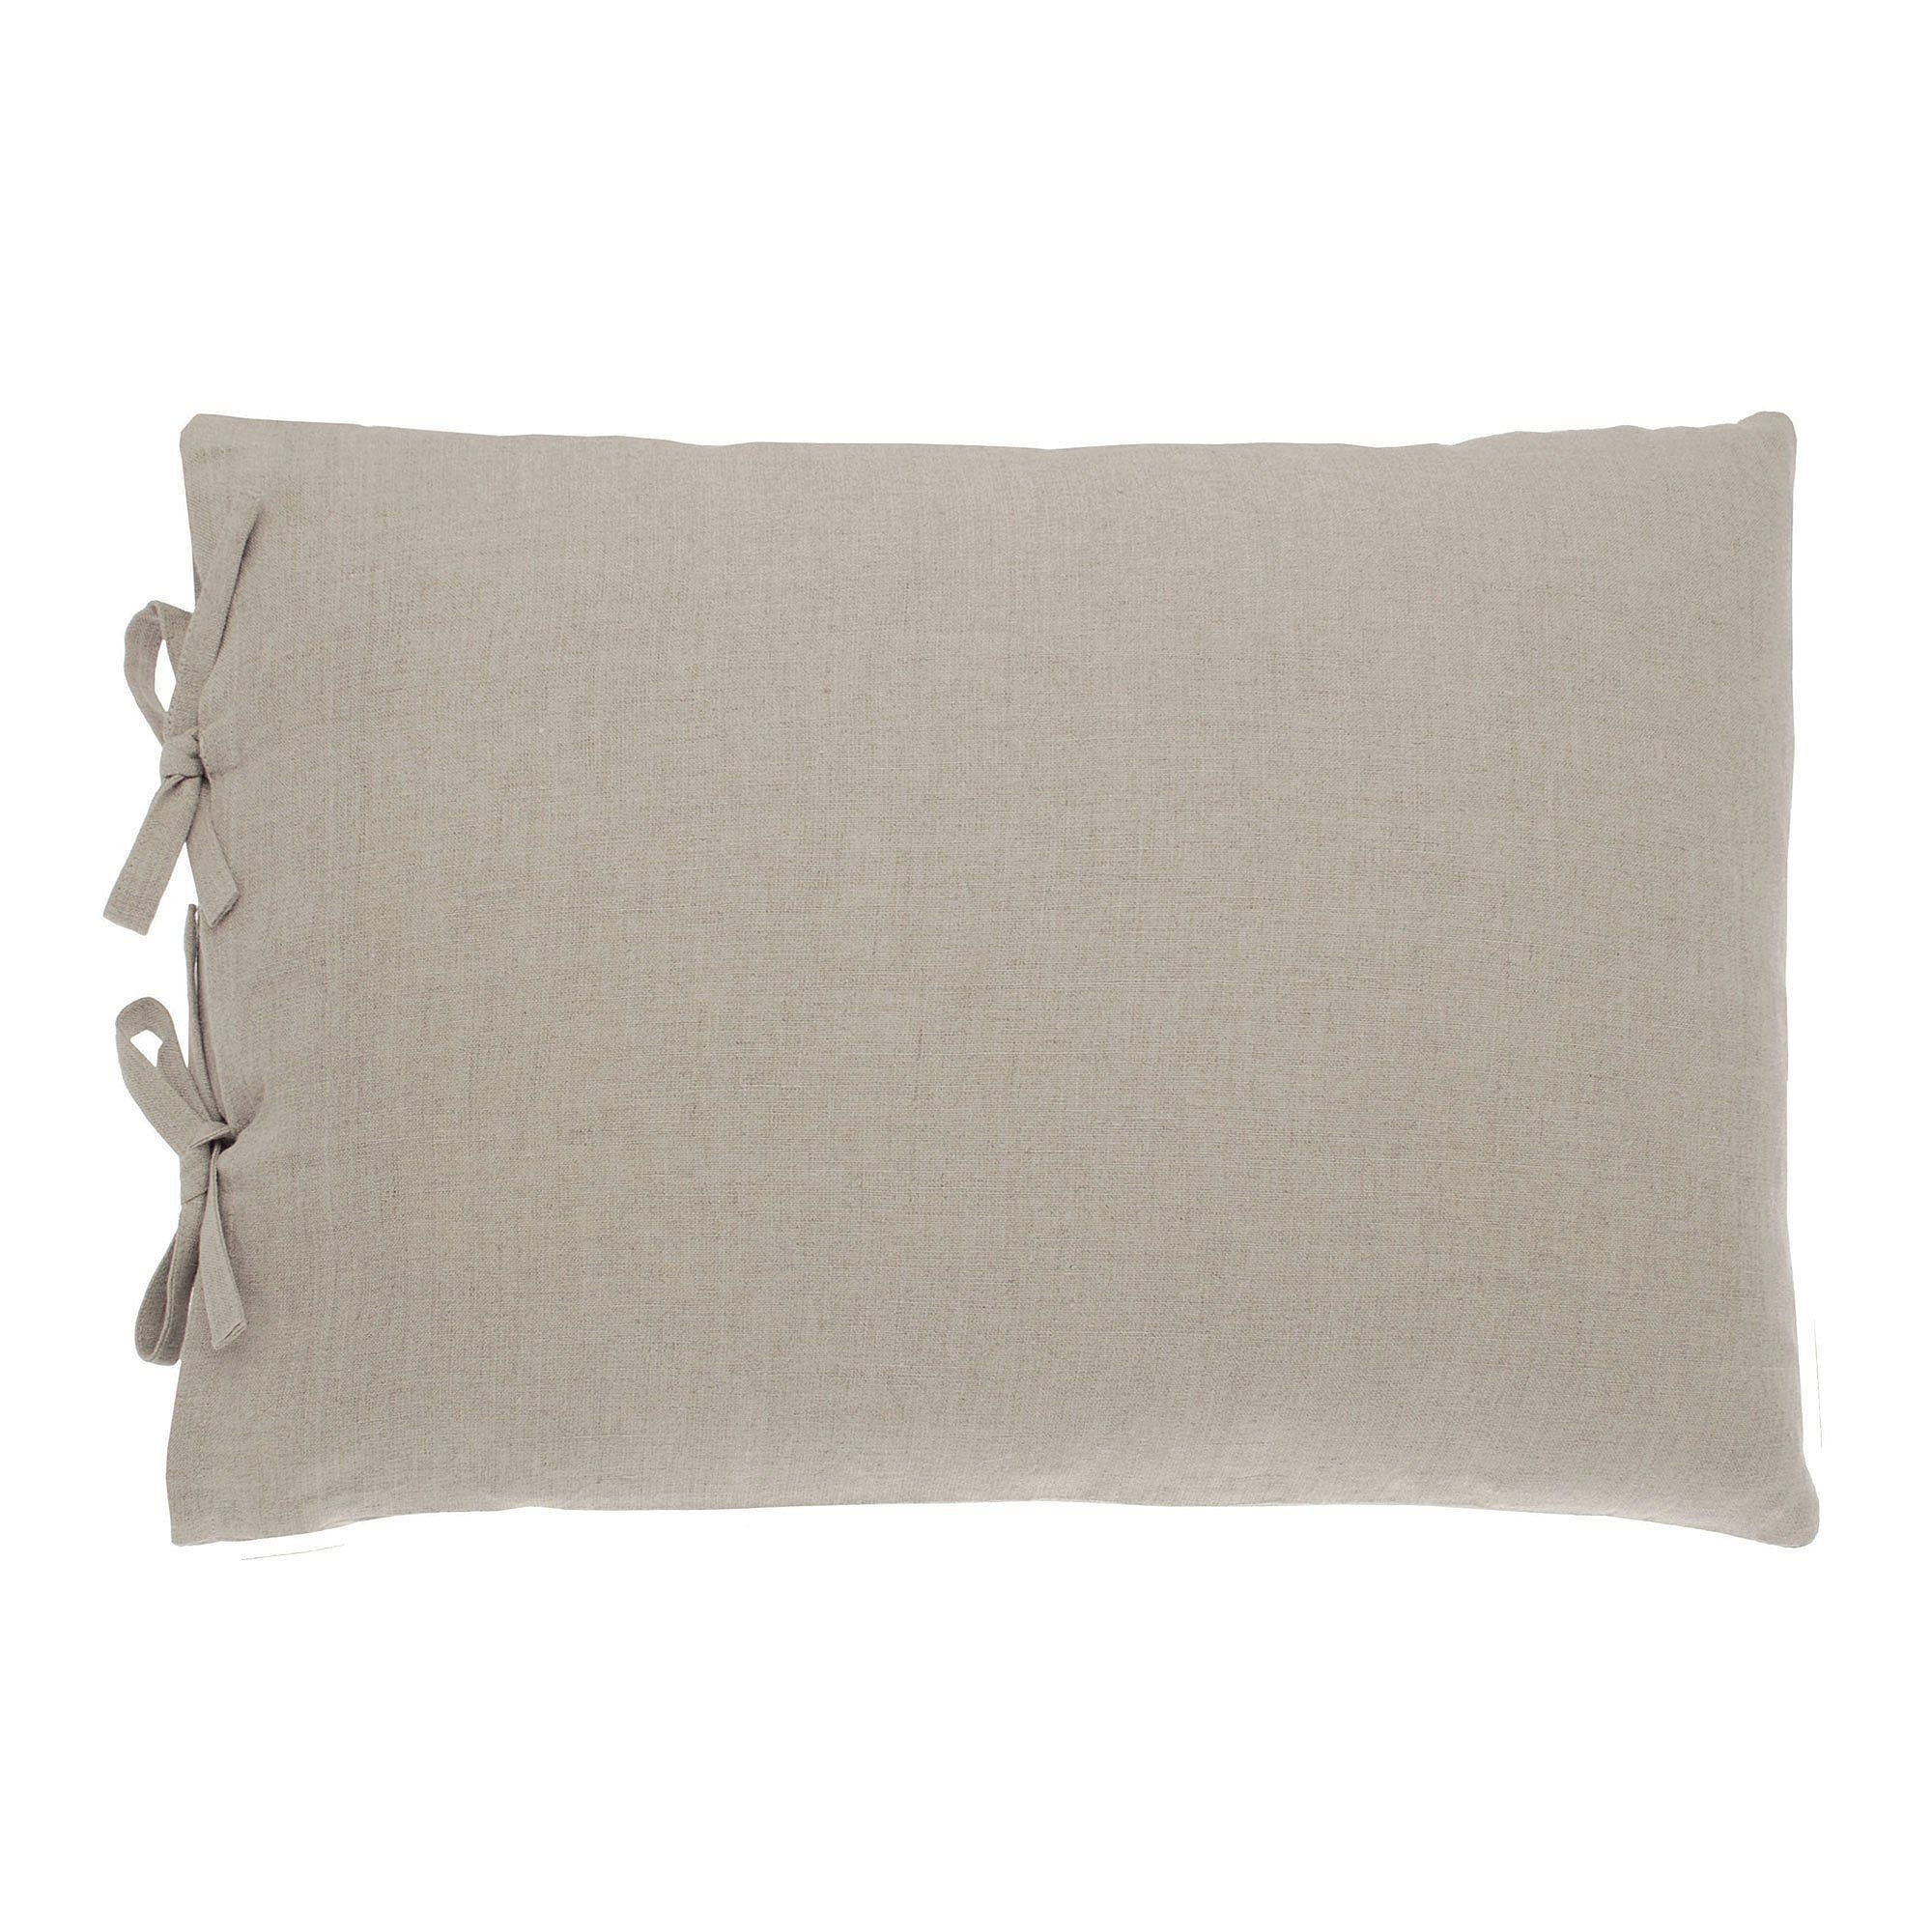 Natural Linen Boudoir Cushion - image 1